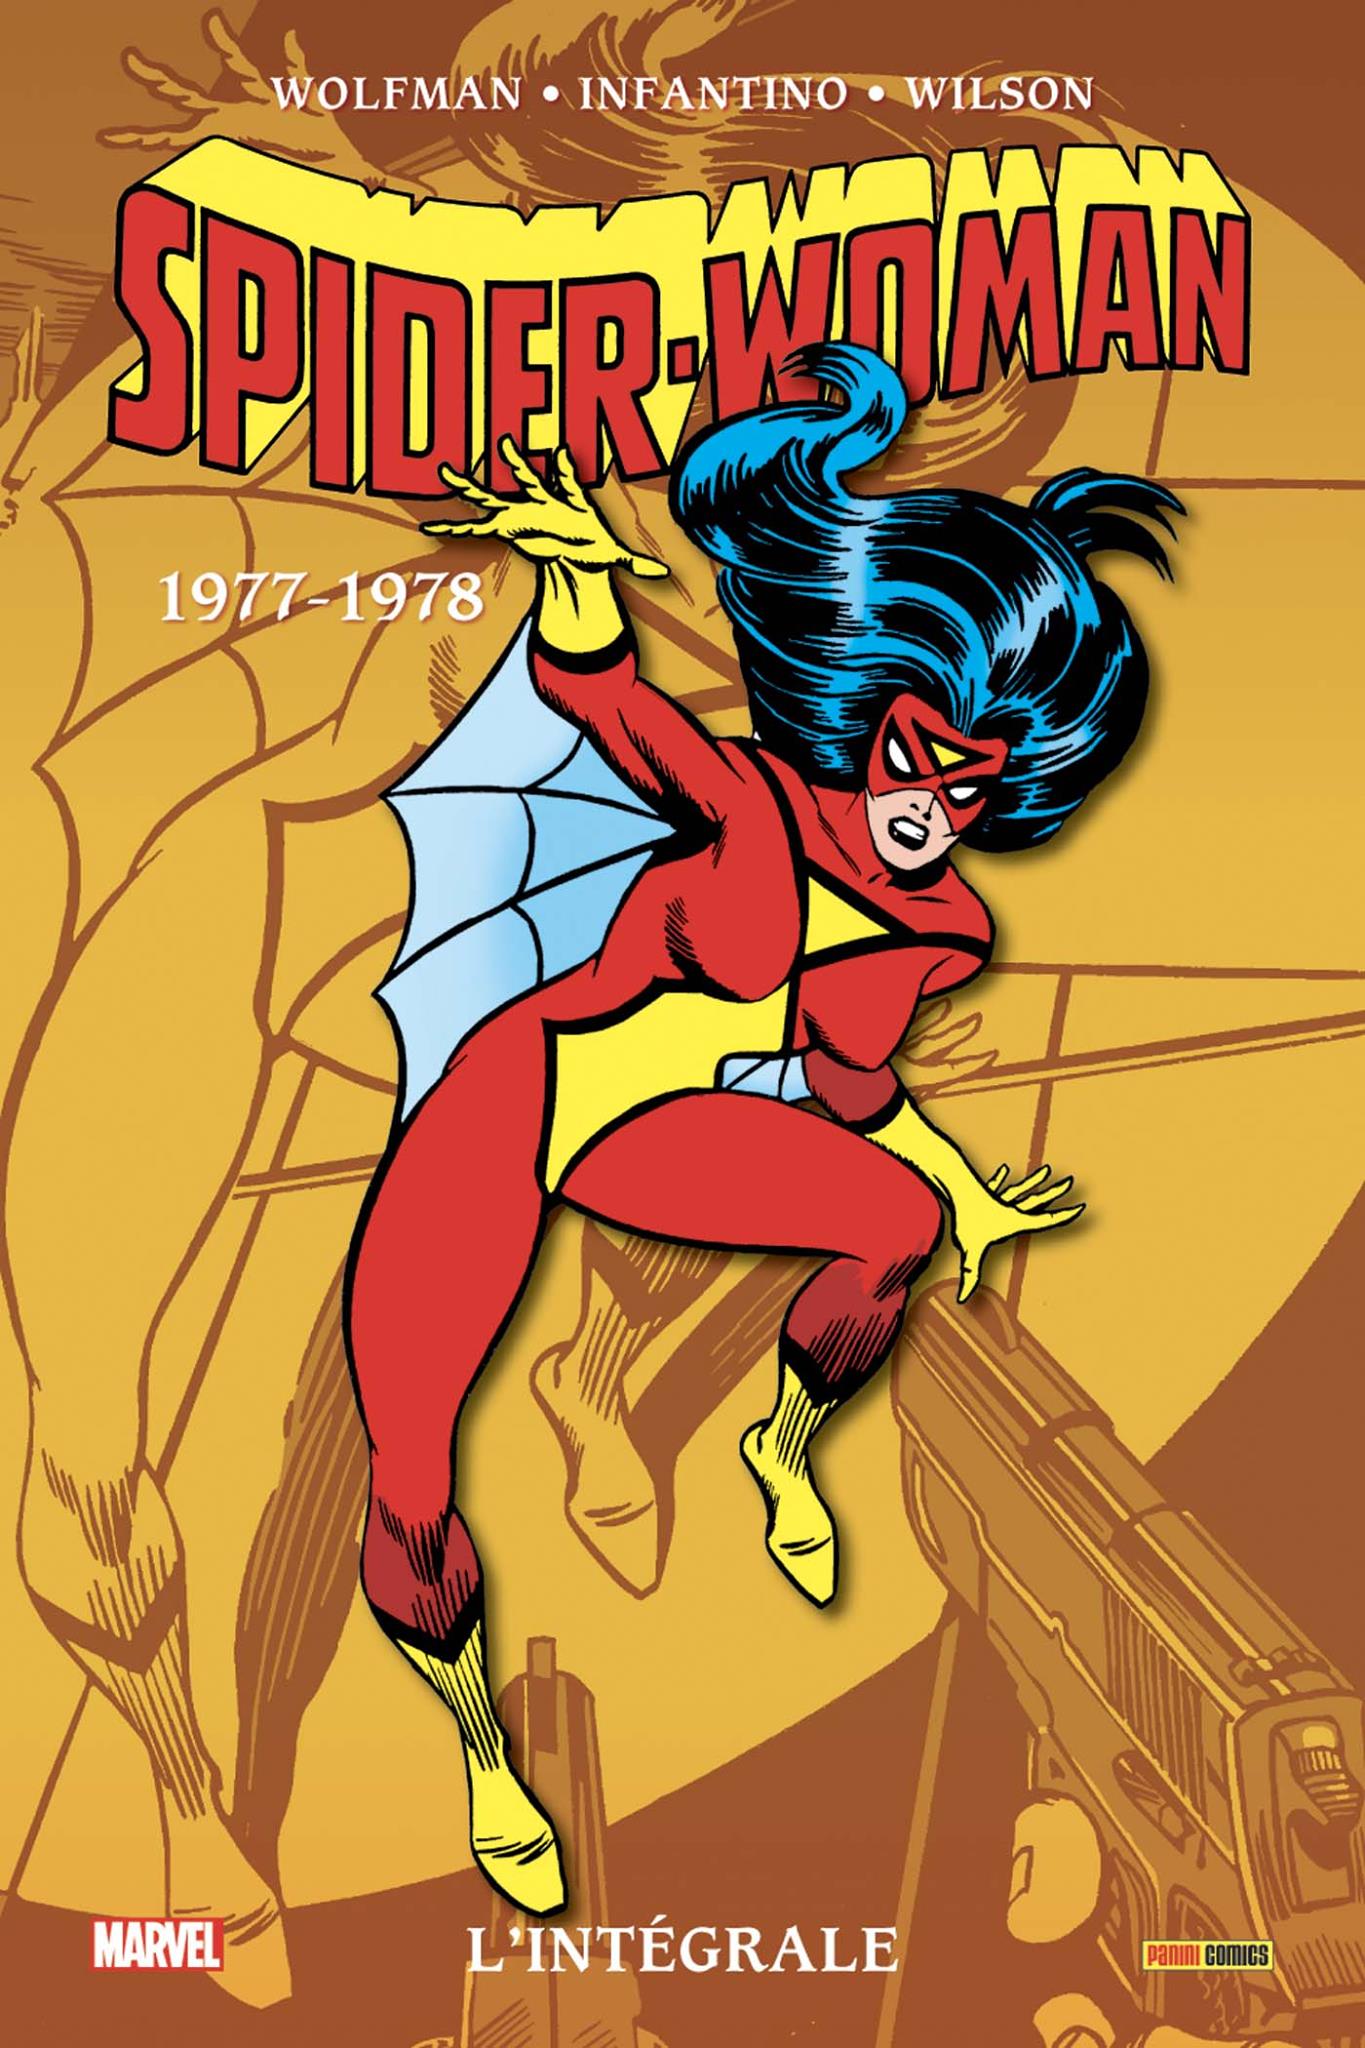 img comics 16435 spider woman l integrale 1977 1978 Les sorties Panini du mois d'Avril